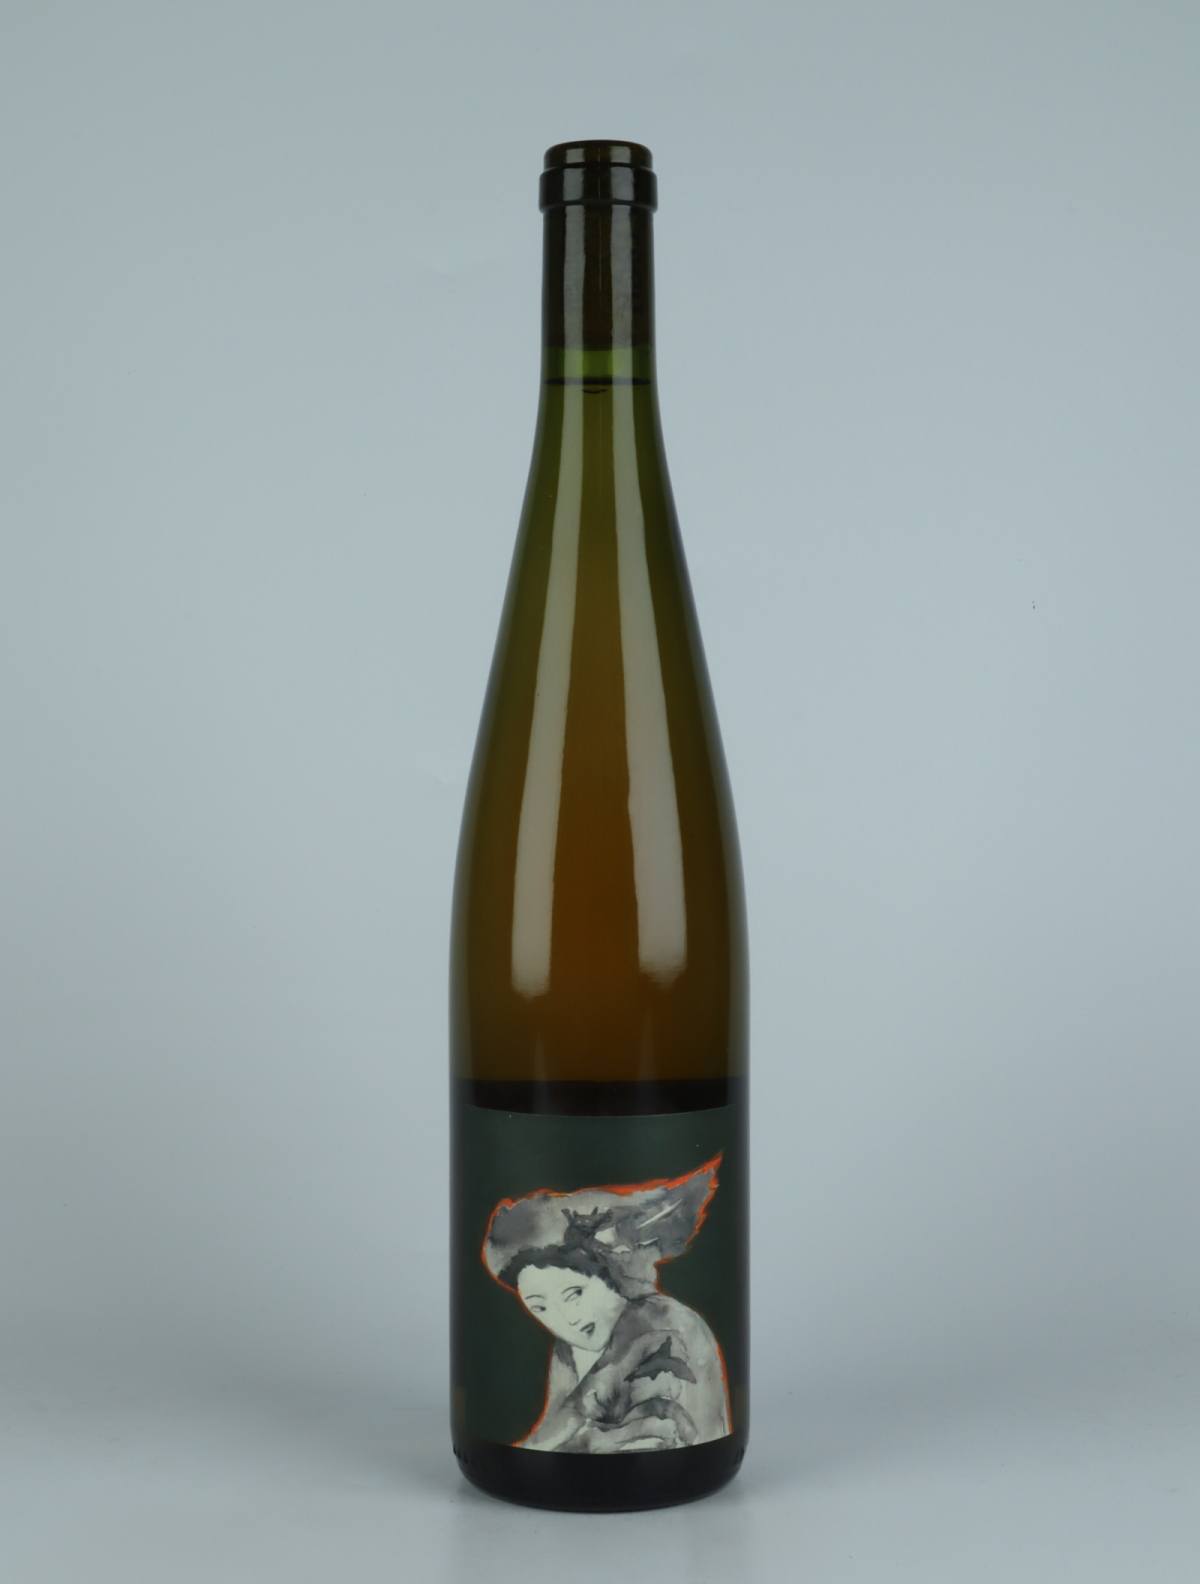 A bottle 2022 Demoiselle Orange wine from Domaine Rietsch, Alsace in France